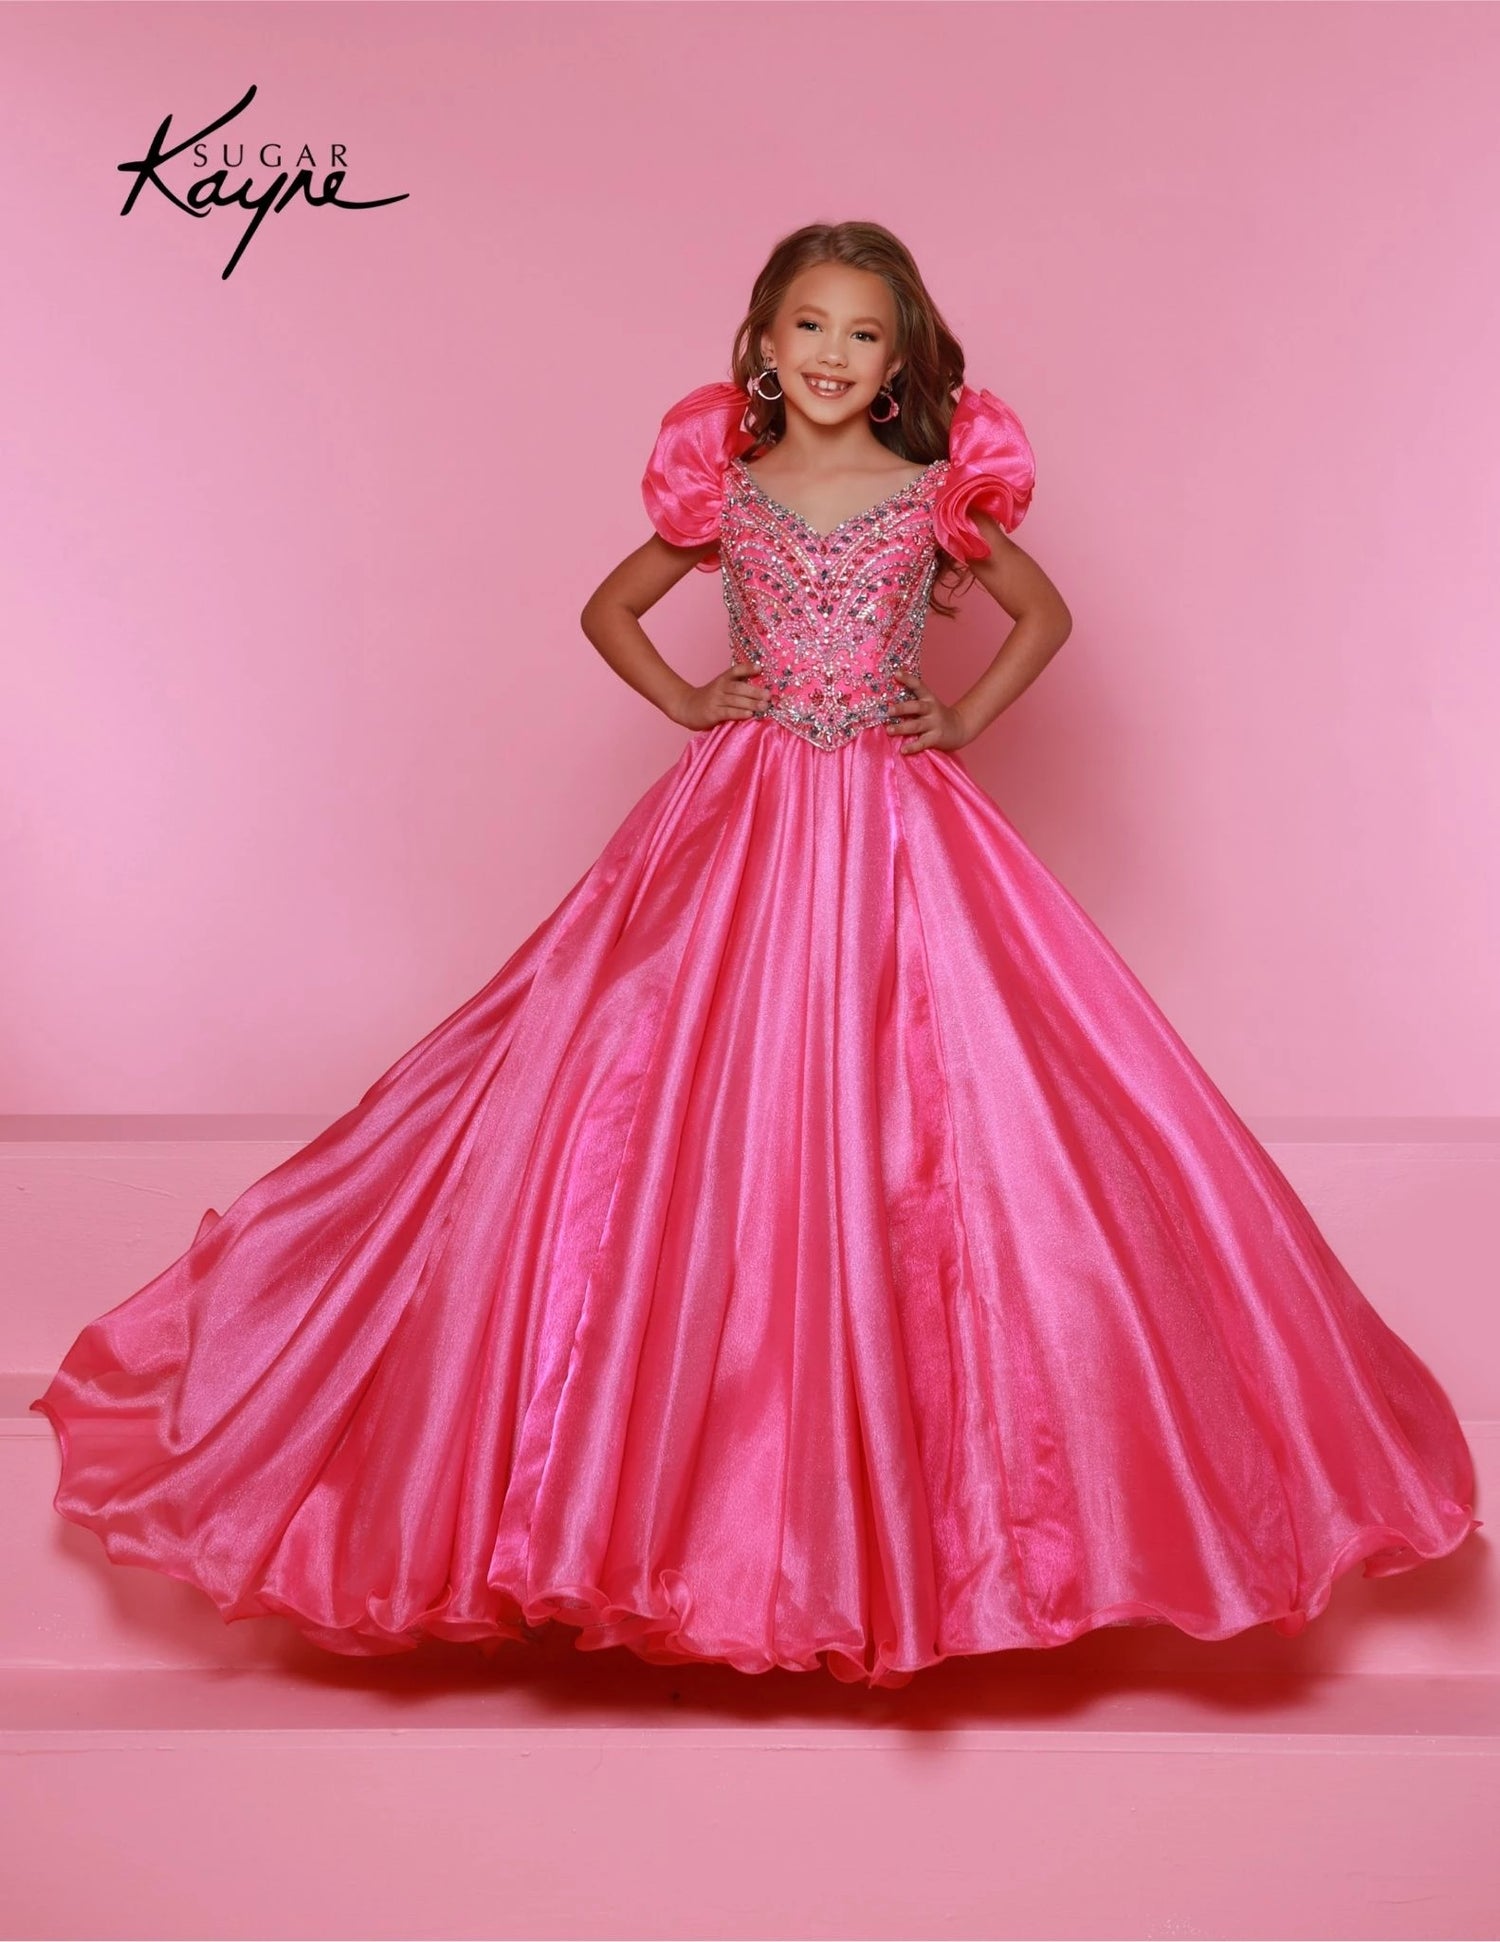 Sugar-Kayne-c334-girls-pageant-dress